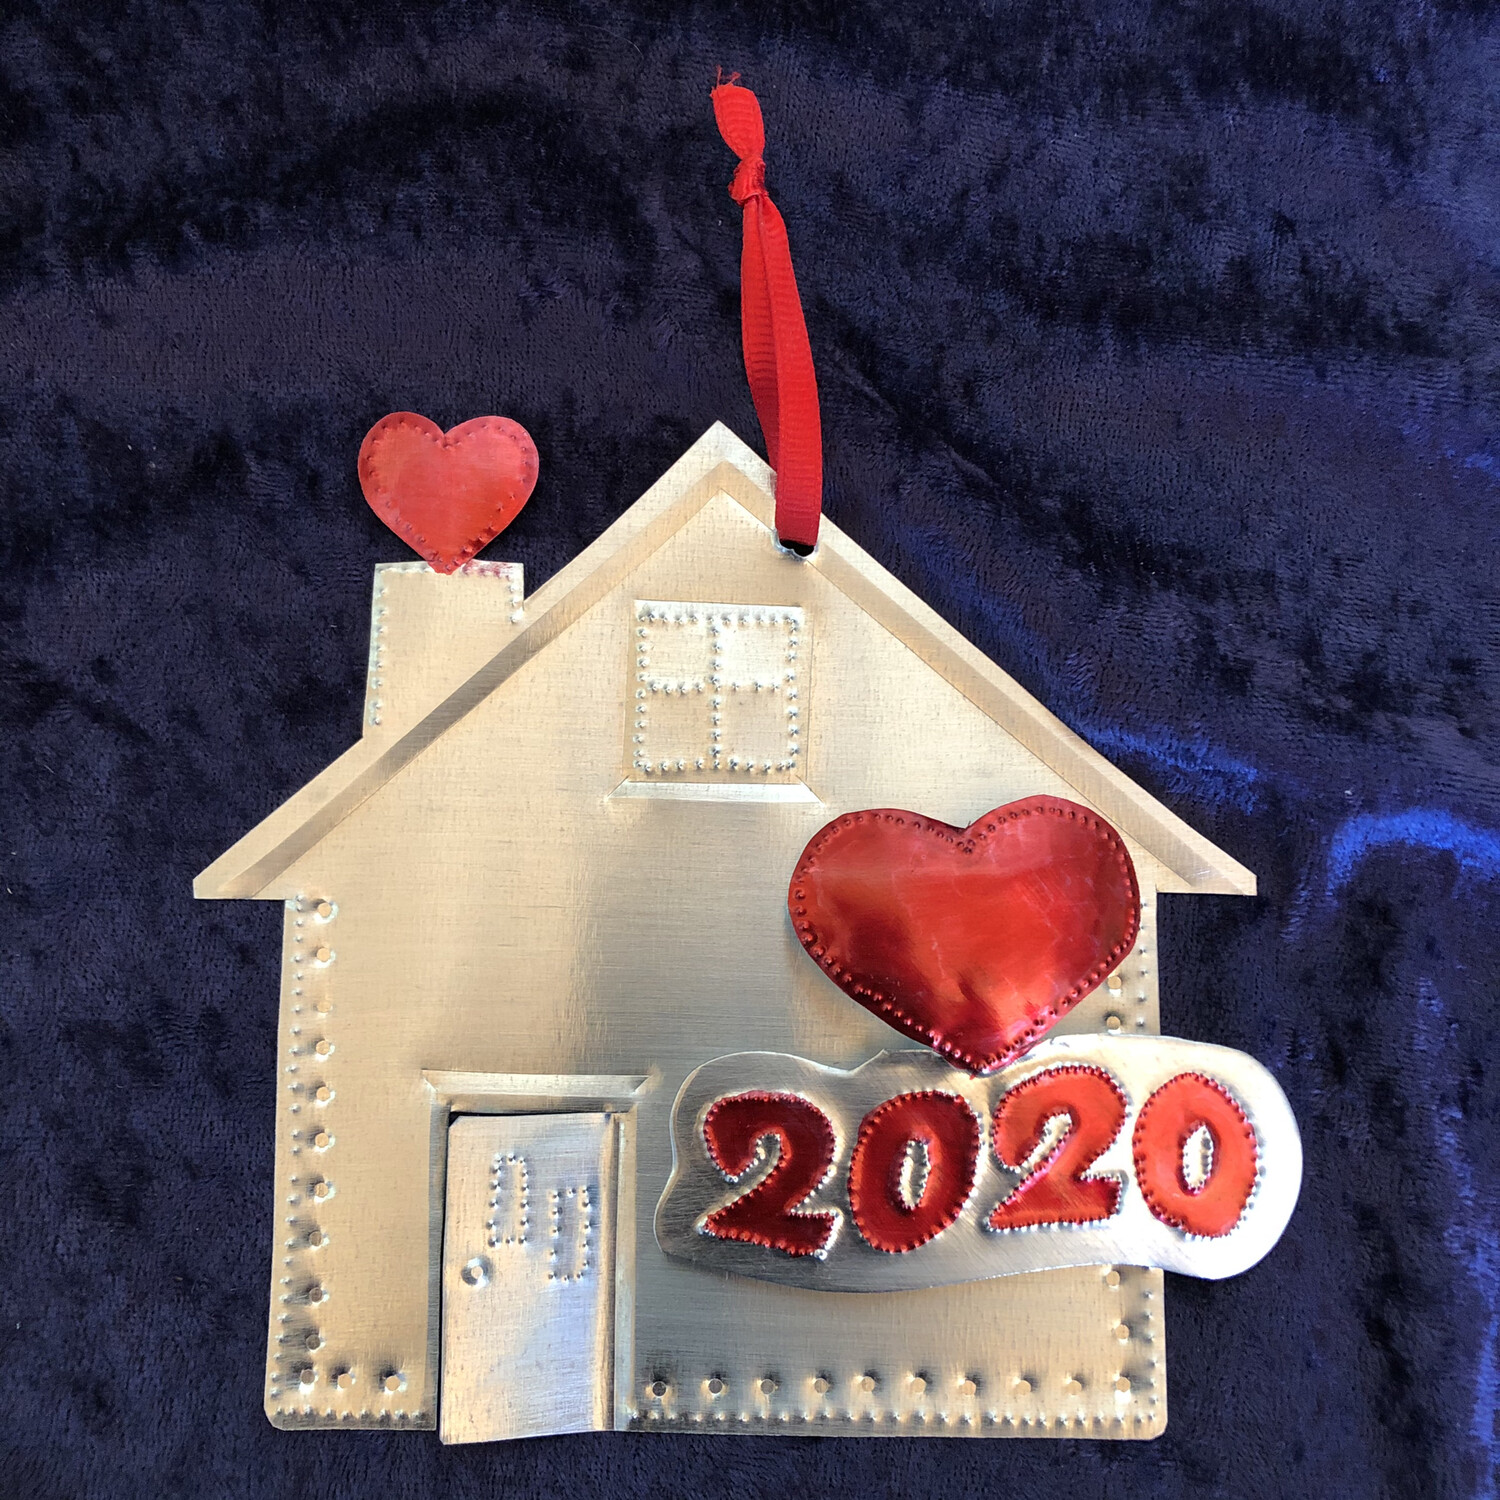 2 Dimension 2020 House Ornament 